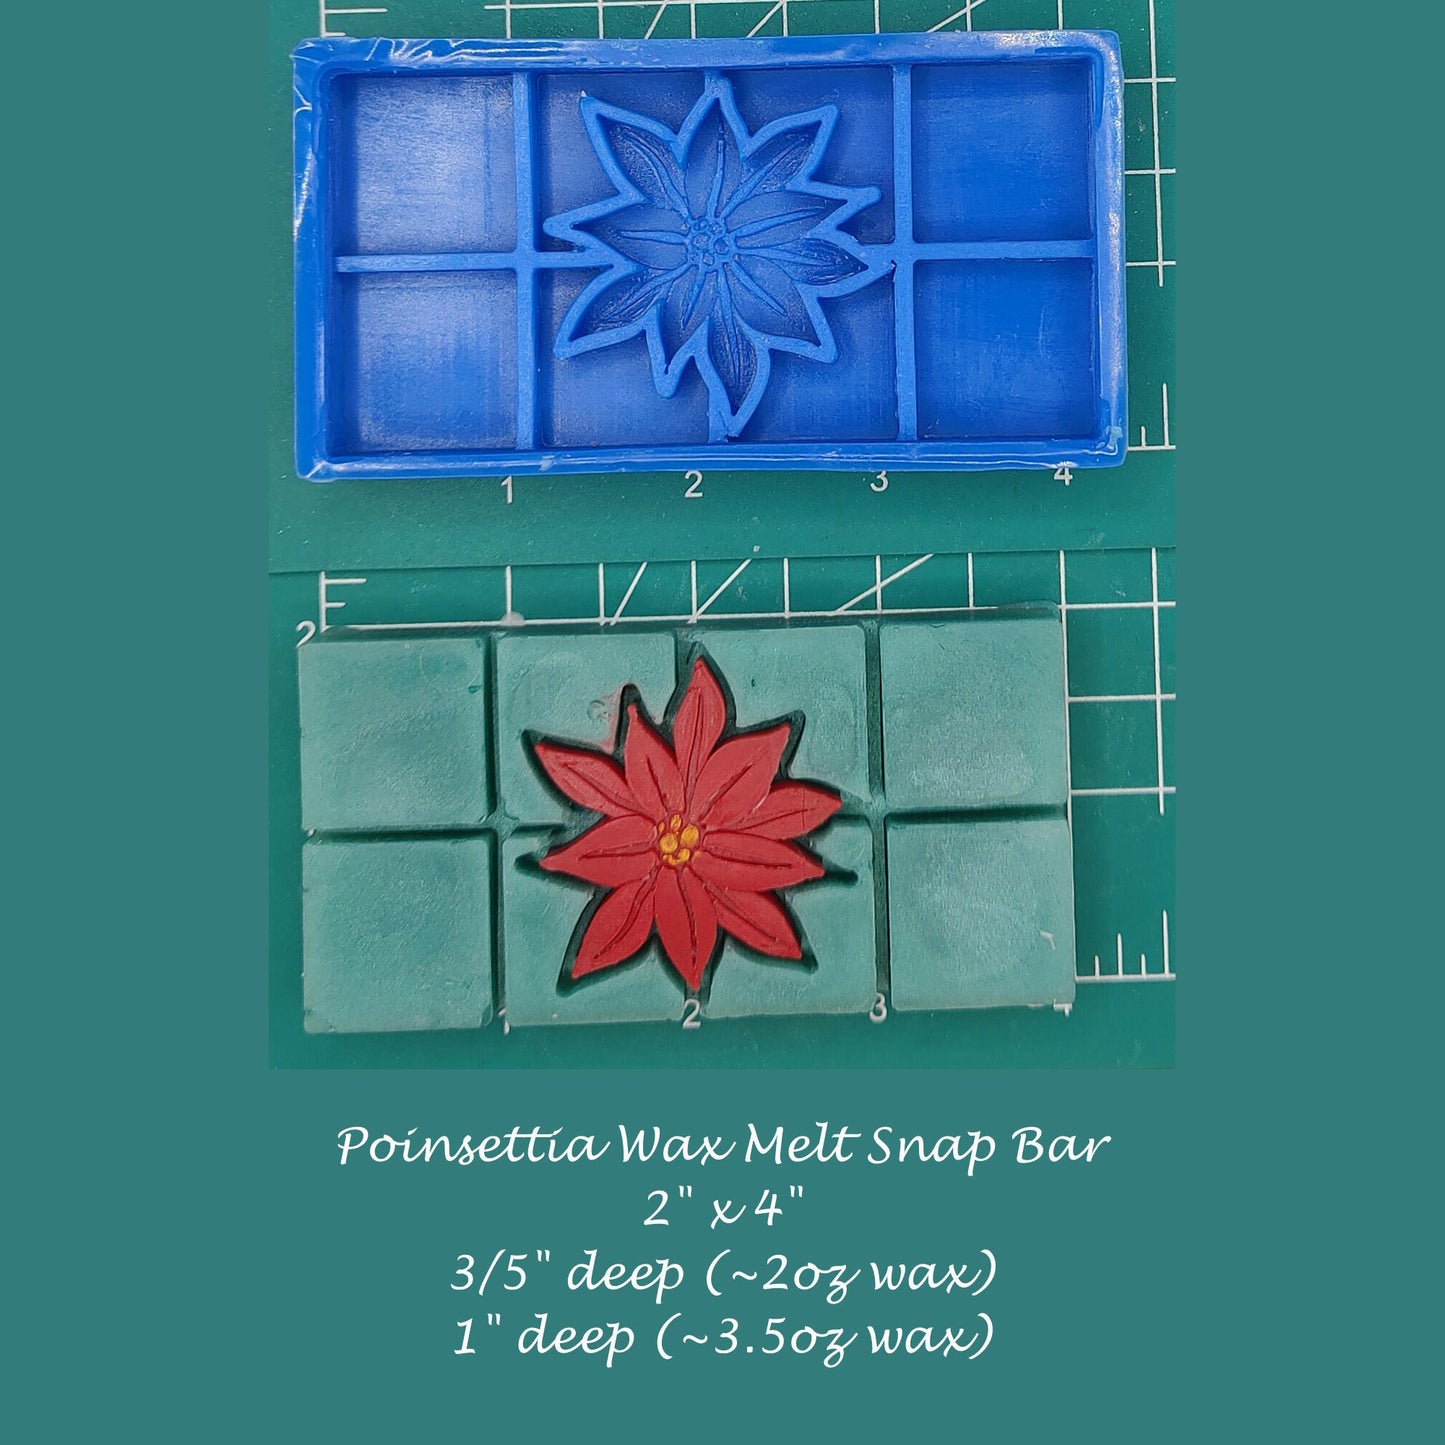 Poinsettia Wax Melt Snap Bar Silicone Mold